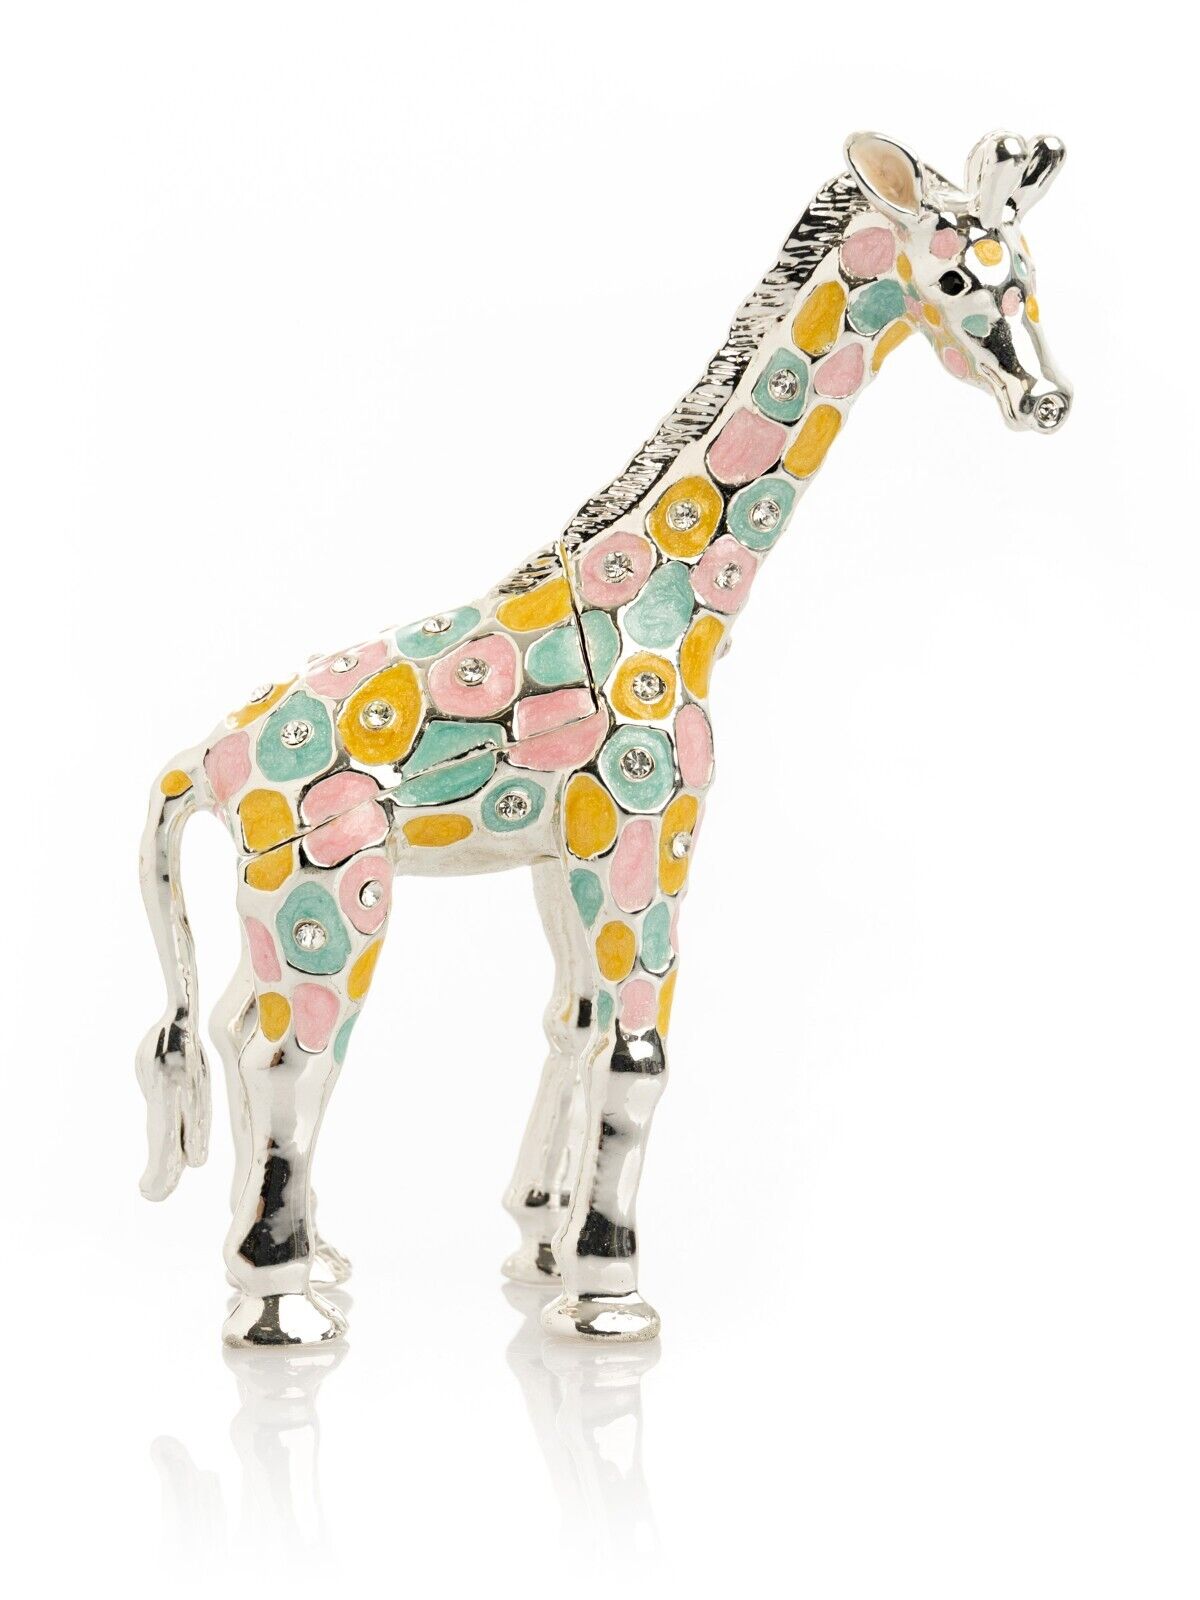 Colorful Giraffe Trinket Box Hand made  by Keren Kopal with  Austrian Crystals